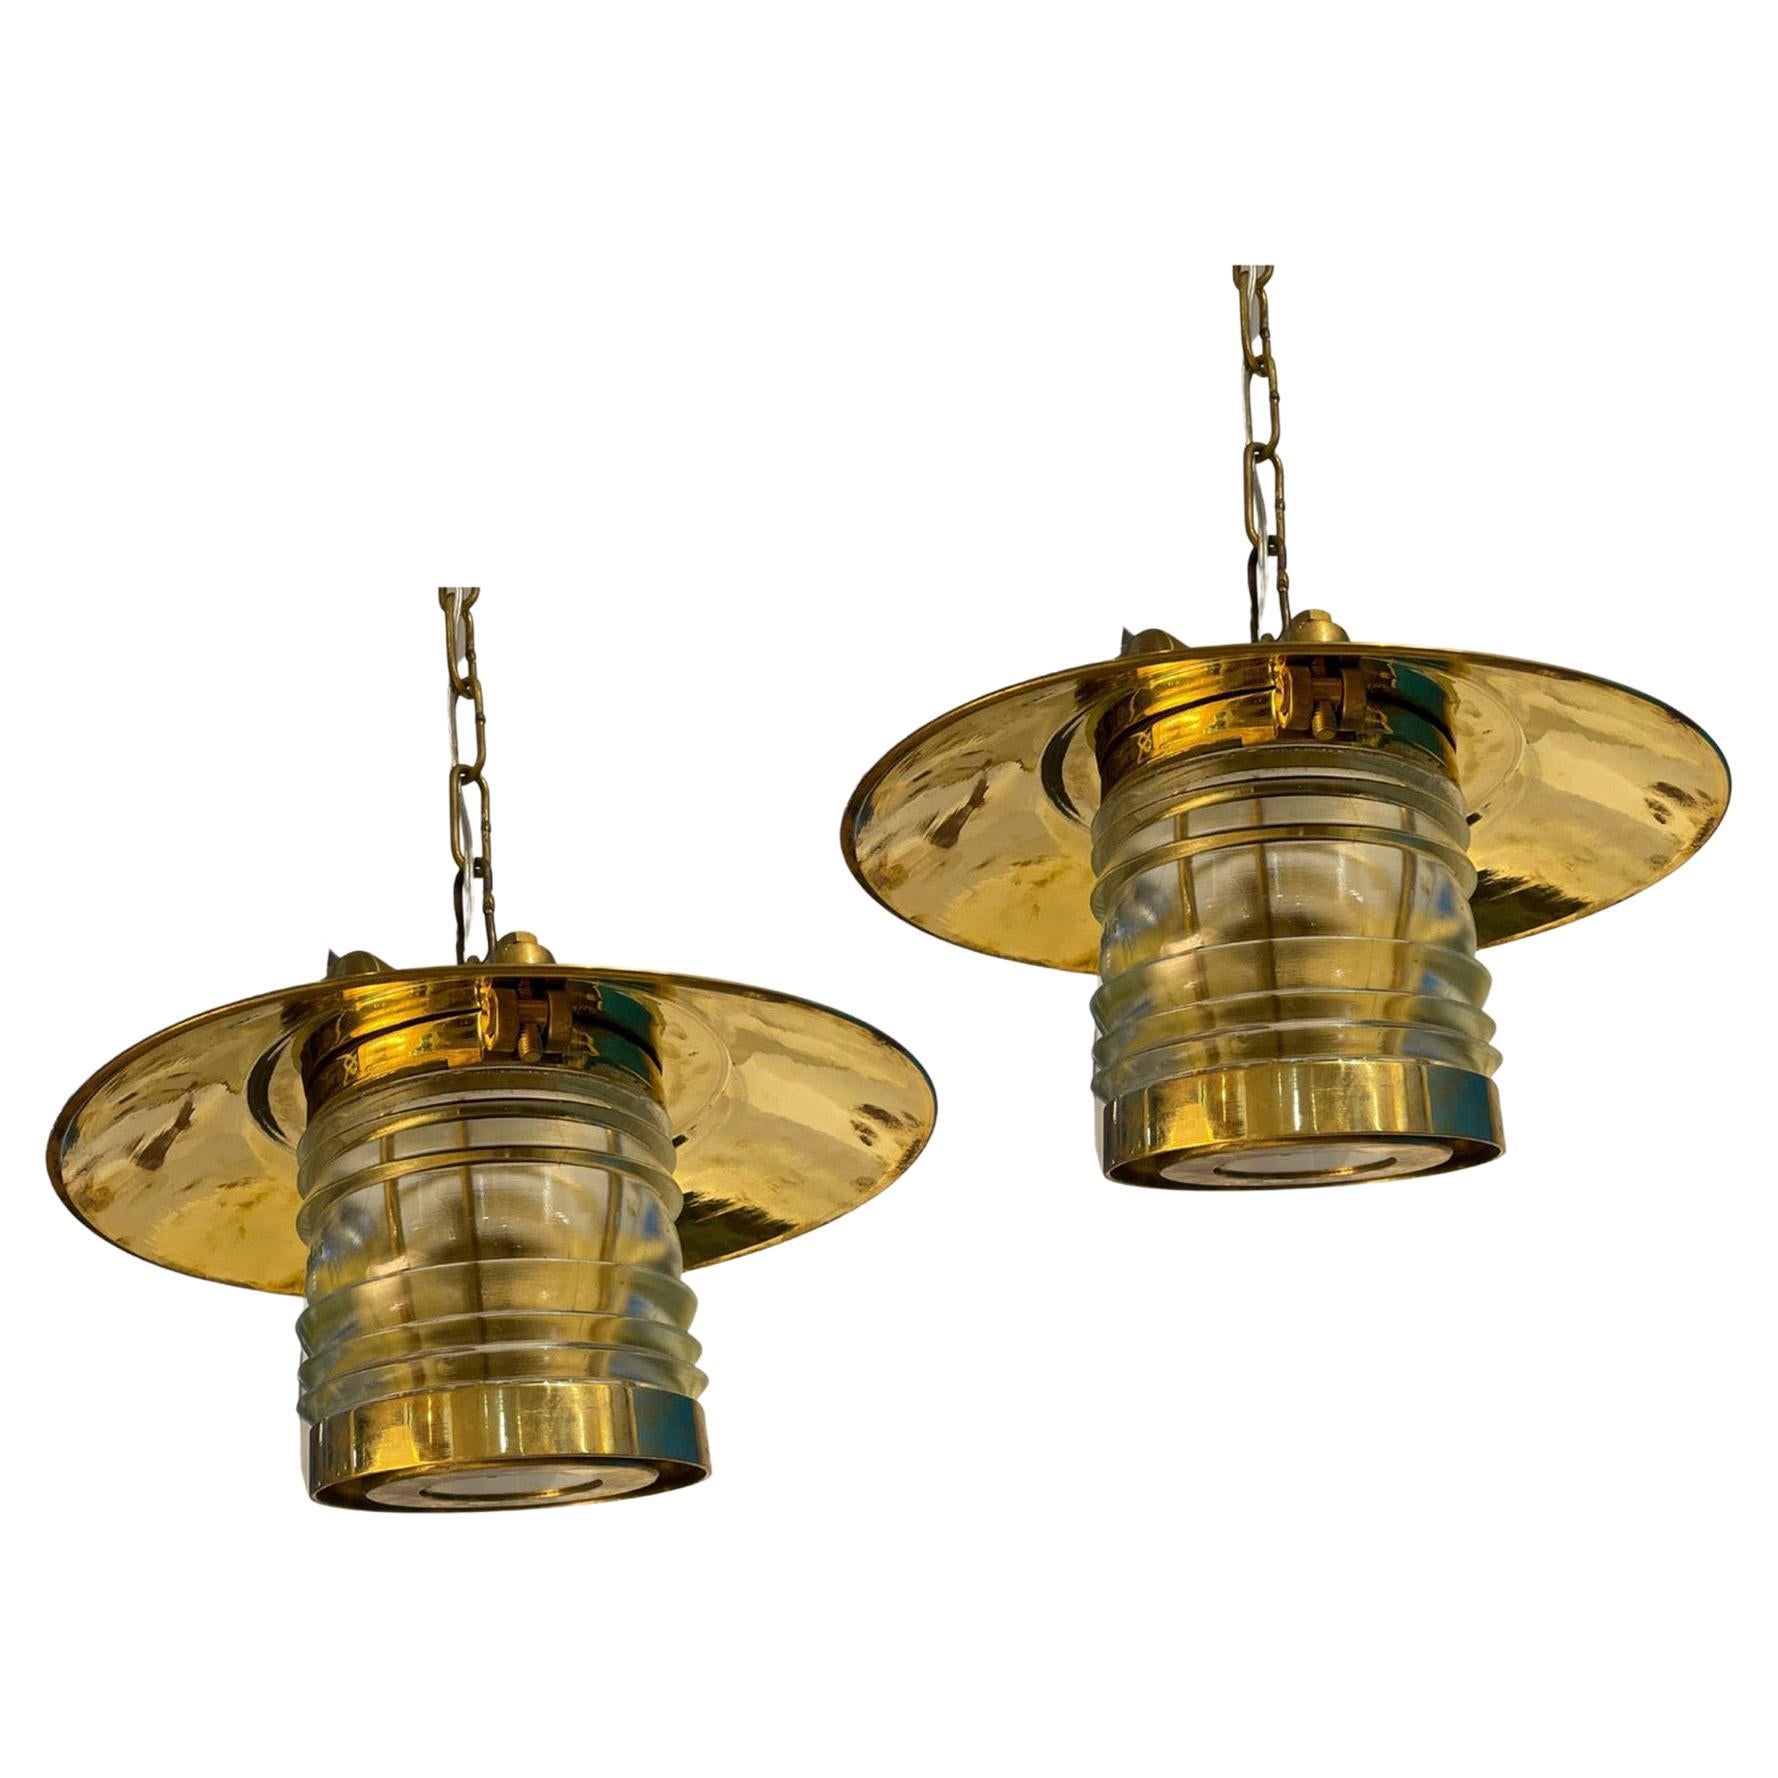 Pair of Brass Ship's Pendant Lights